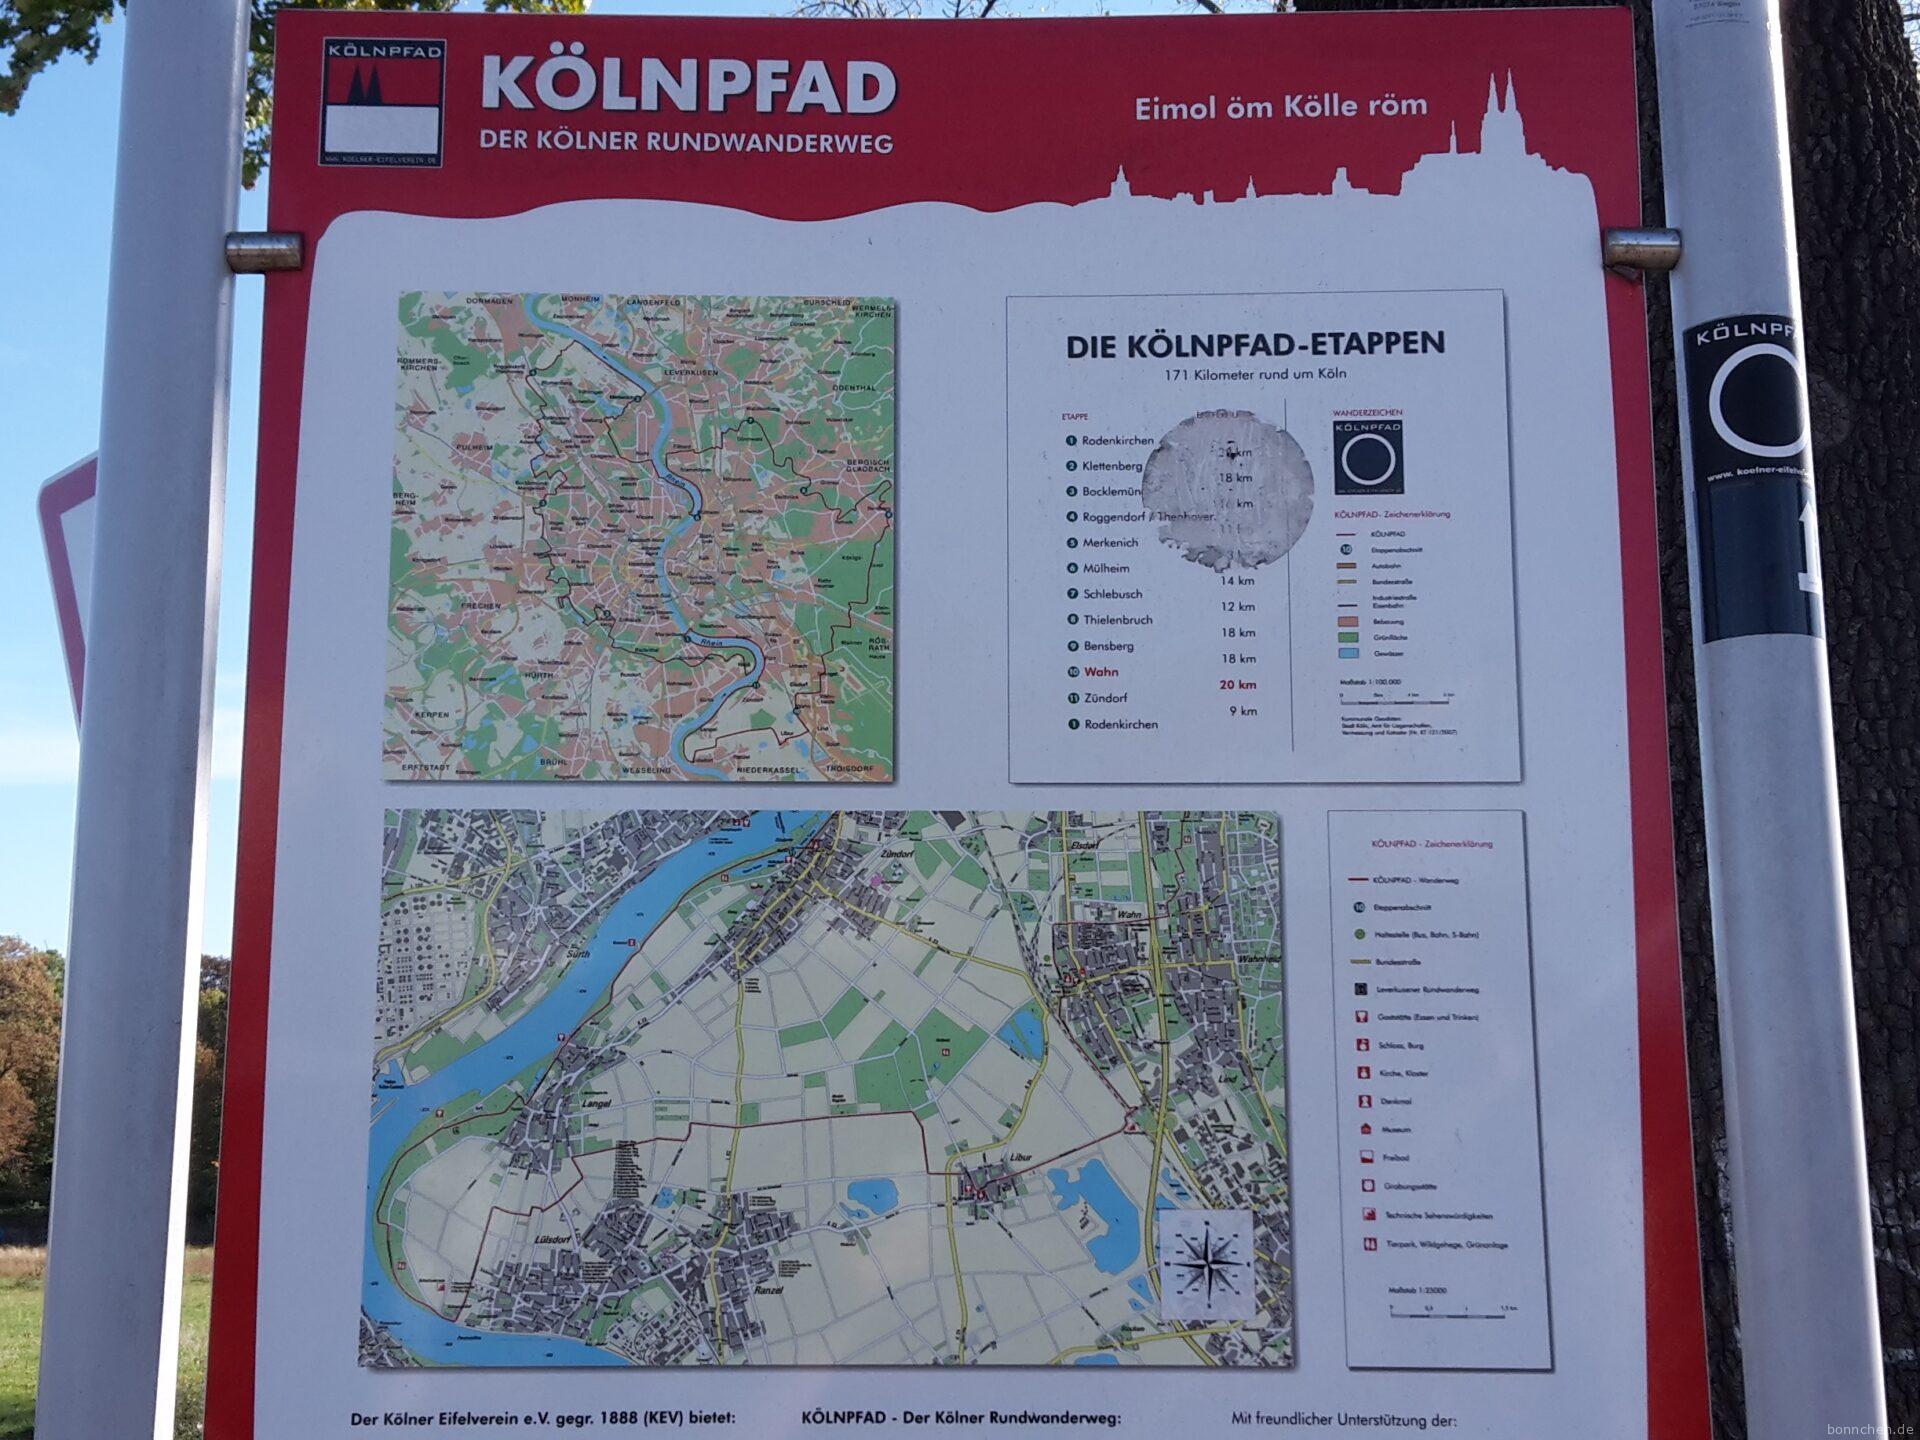 Tafel der Kölnpfad Etappe 10